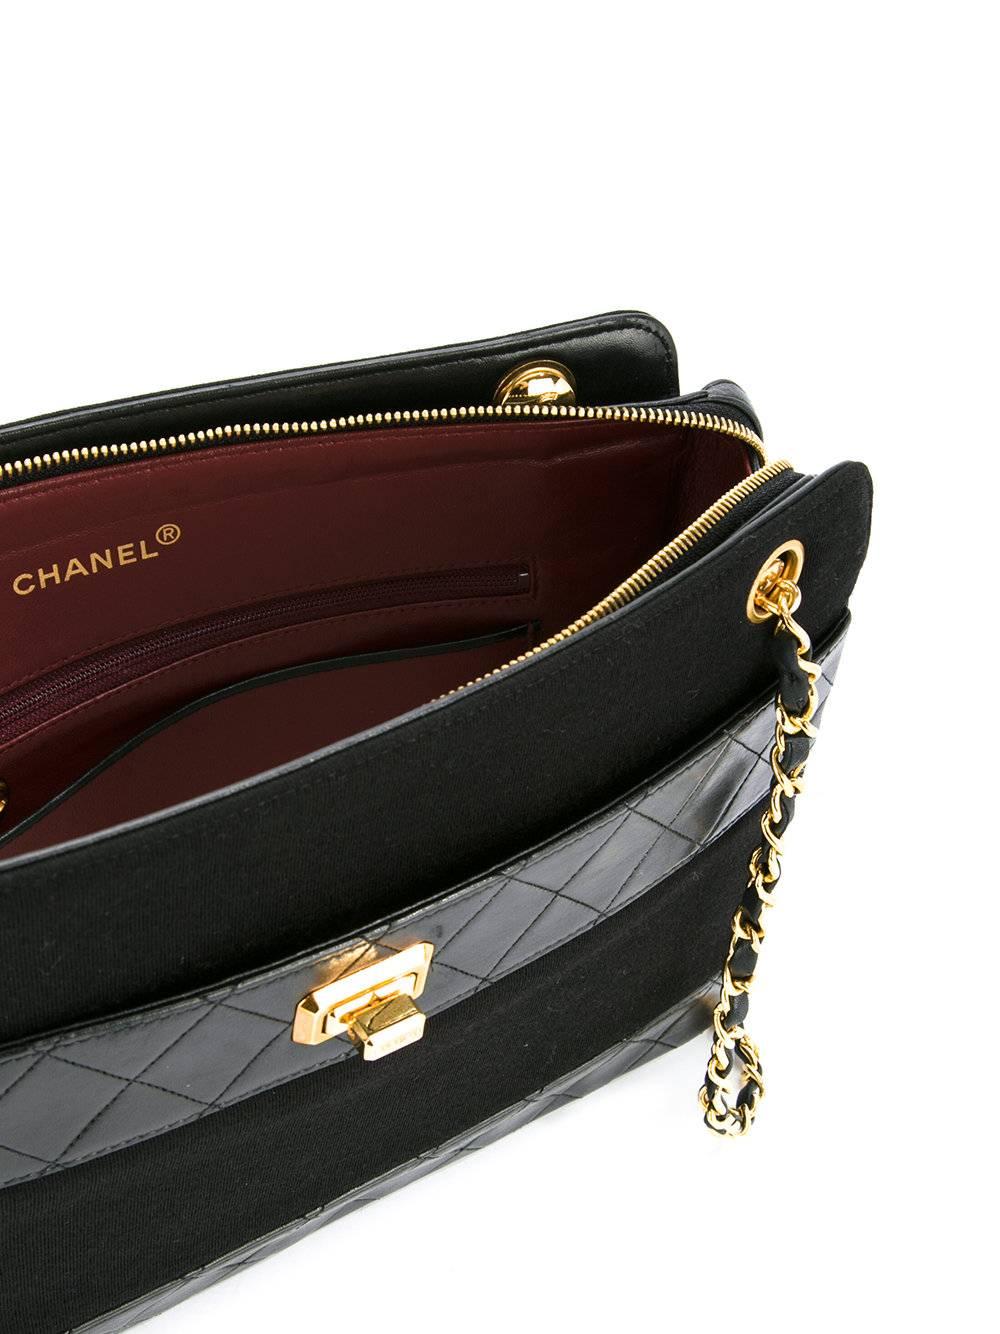 Chanel Black Leather Fabric Turnlock Square Shoulder Bag  2